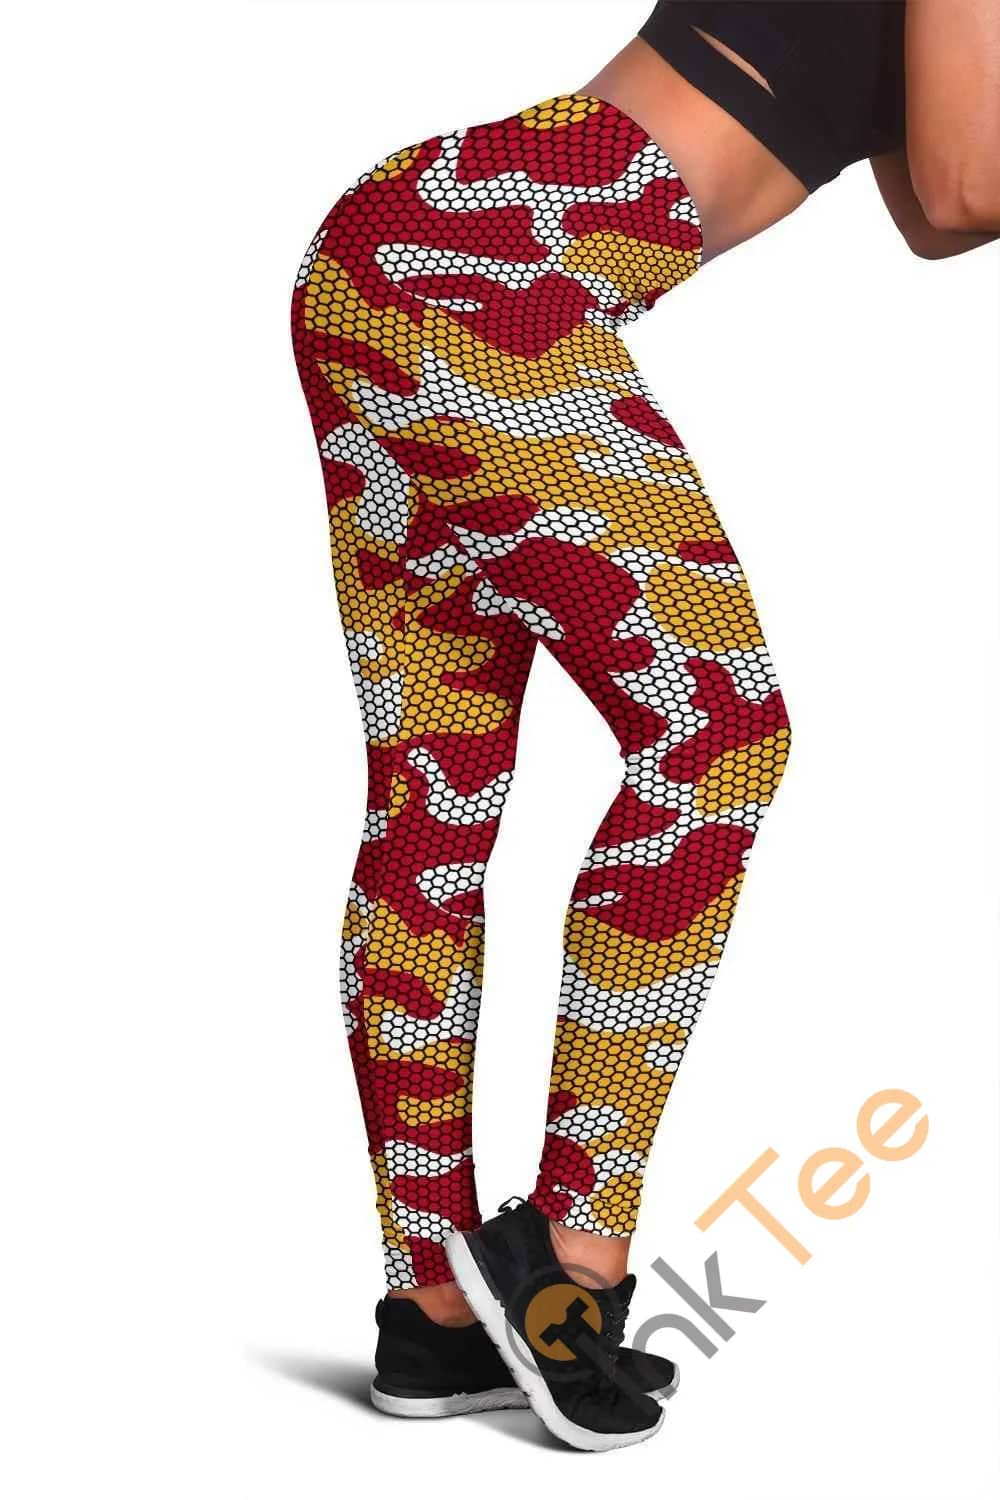 Kansas City Chiefs Inspired Hex Camo 3D All Over Print For Yoga Fitness Fashion Women'S Leggings